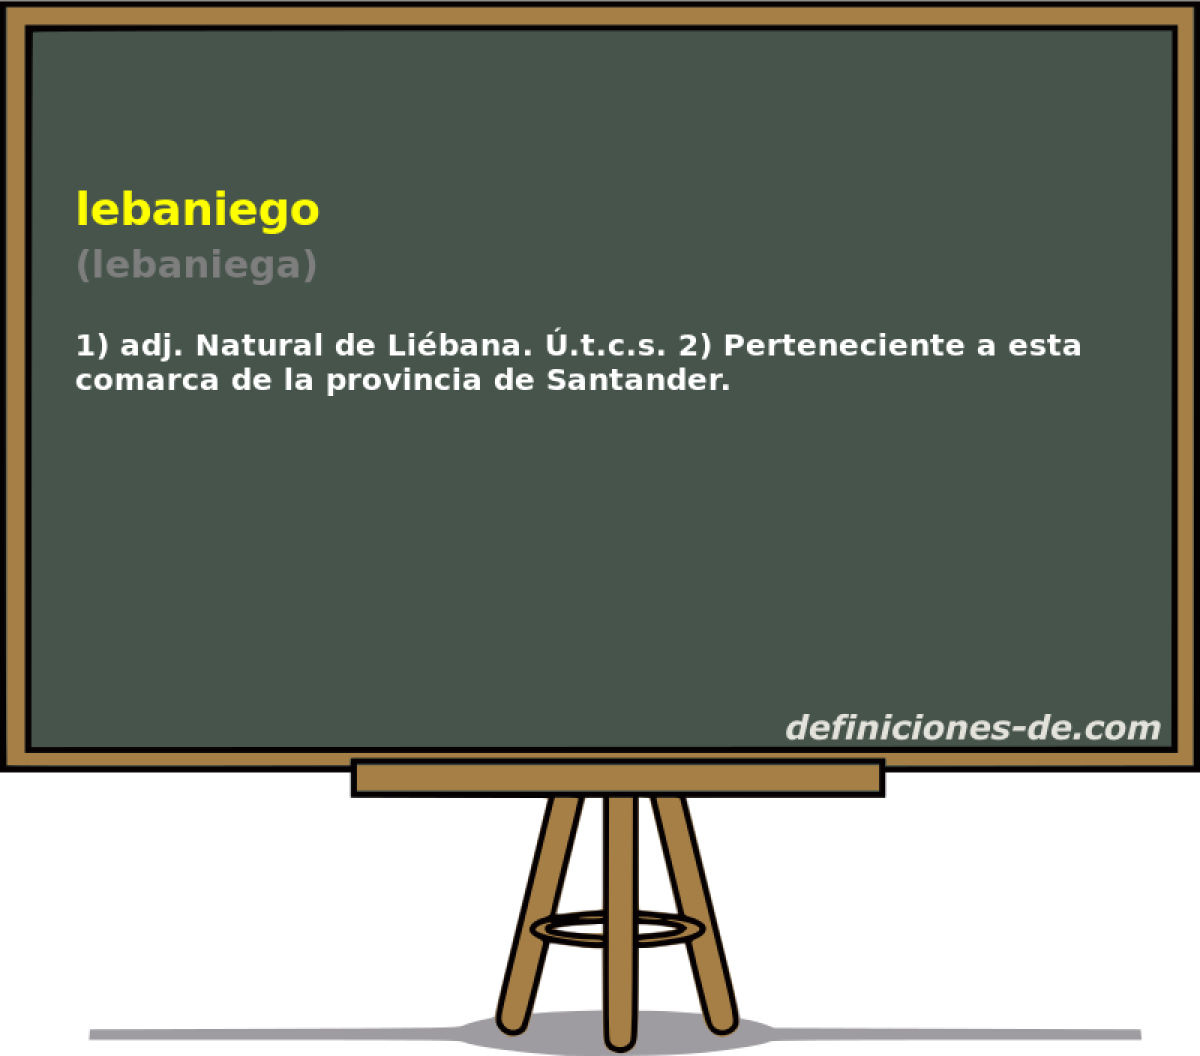 lebaniego (lebaniega)